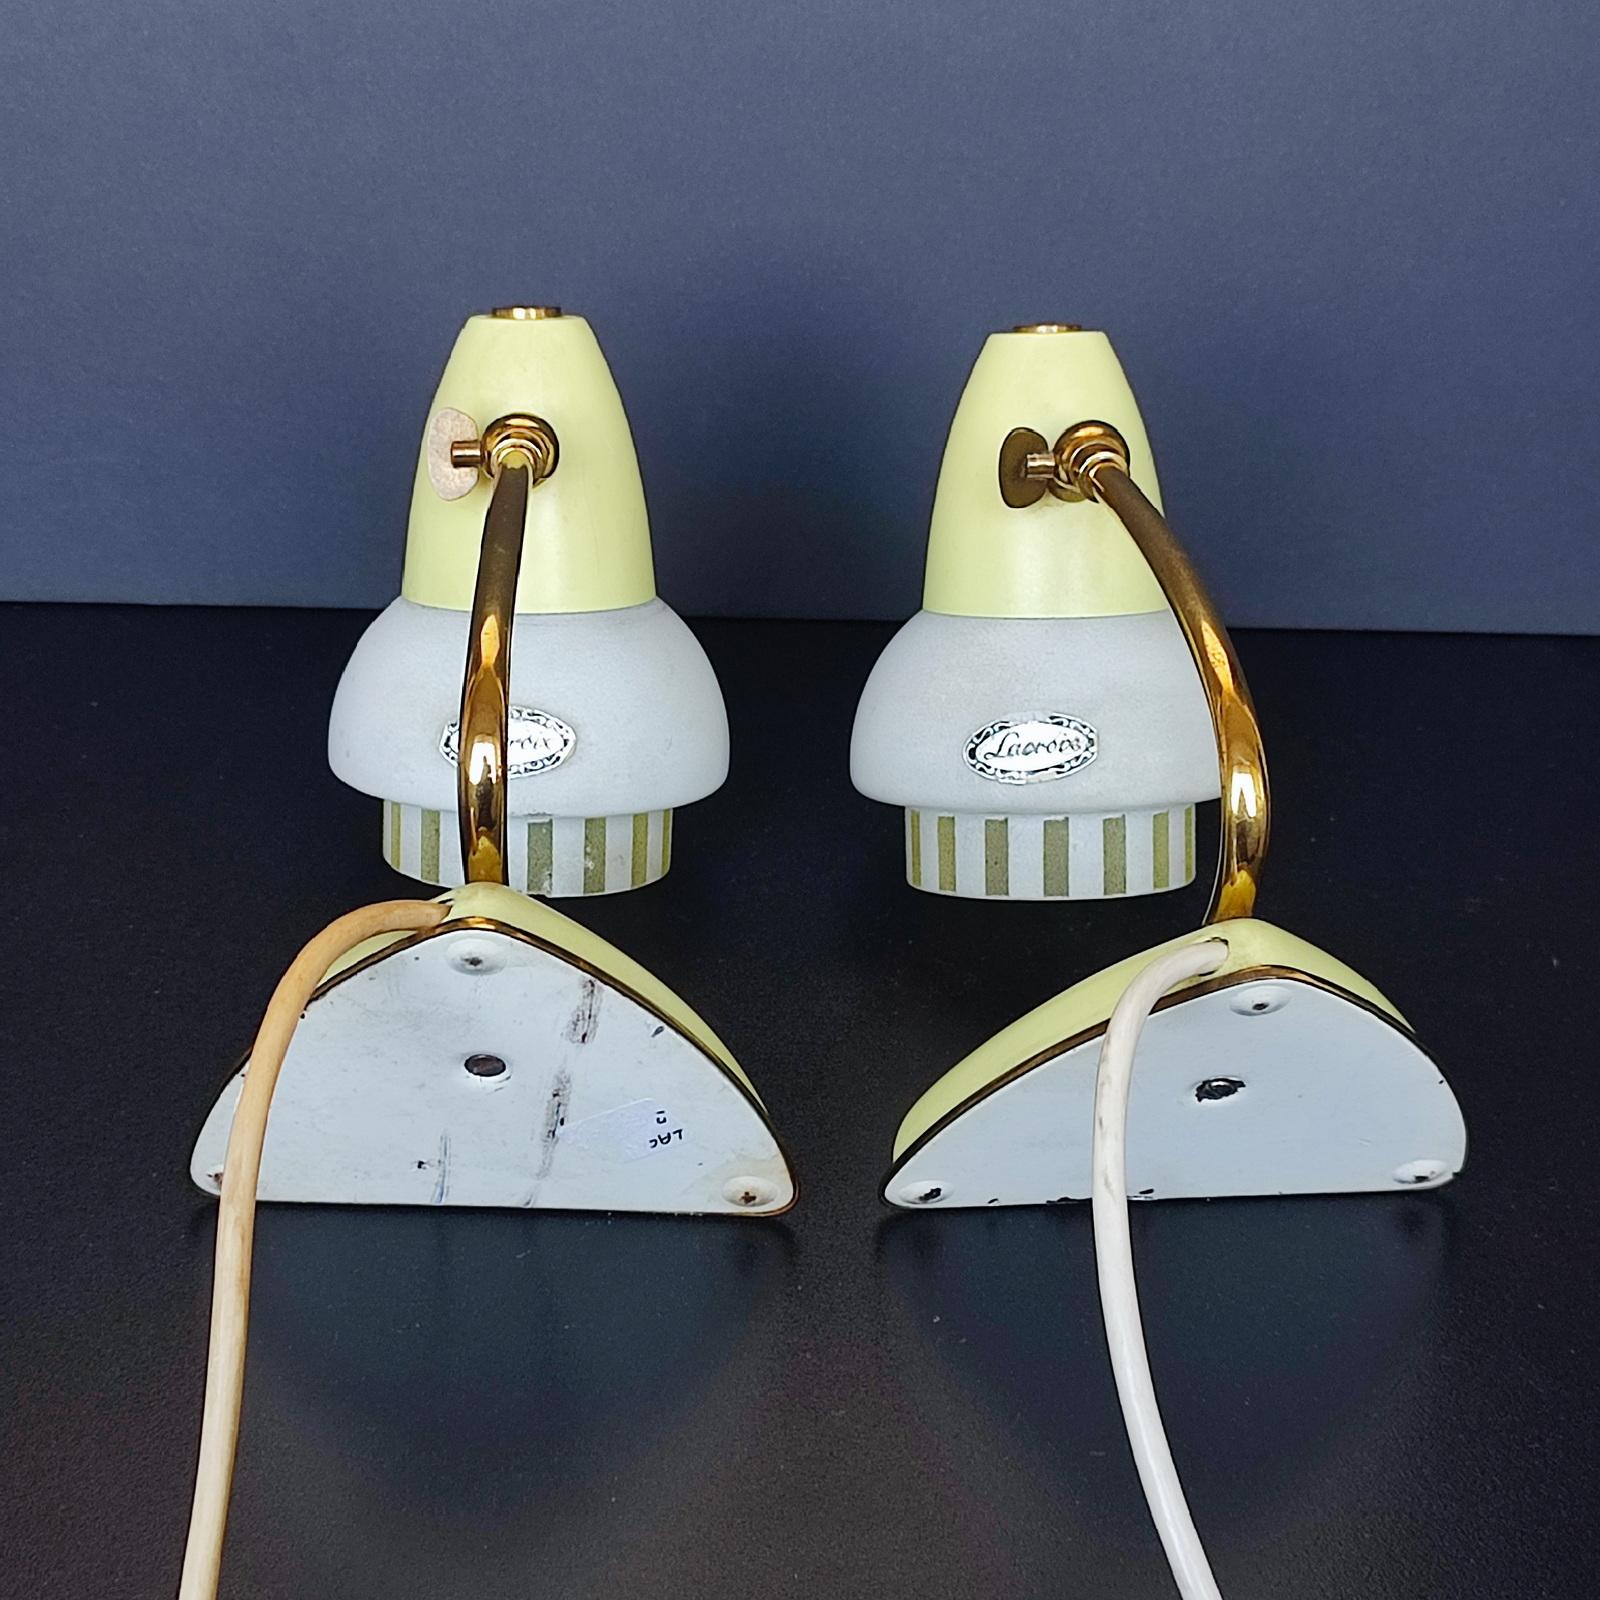 Metal Boris Lacroix Table Lamps or Bedside Lamps, France, 1950s For Sale